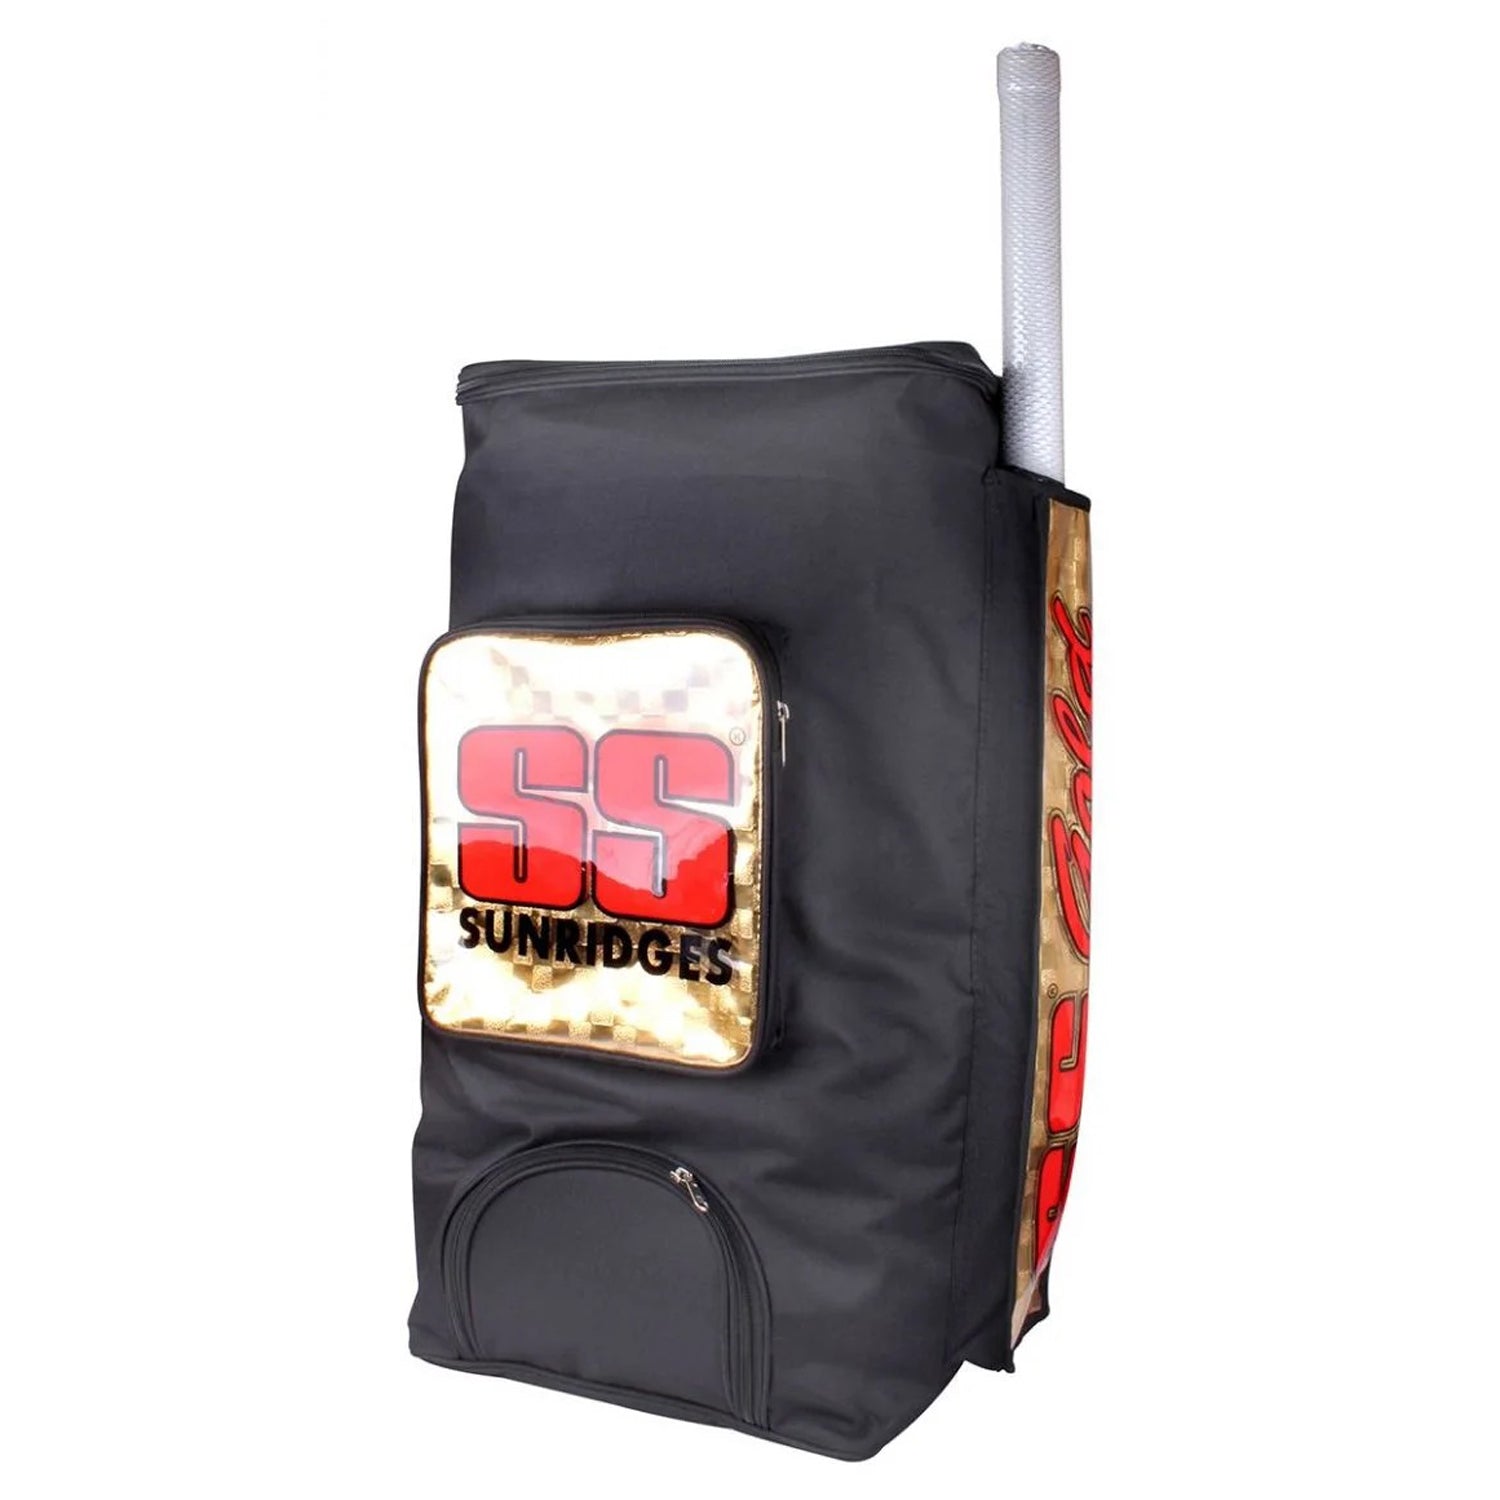 SS Duffle Gold Cricket Kit Bag - Best Price online Prokicksports.com